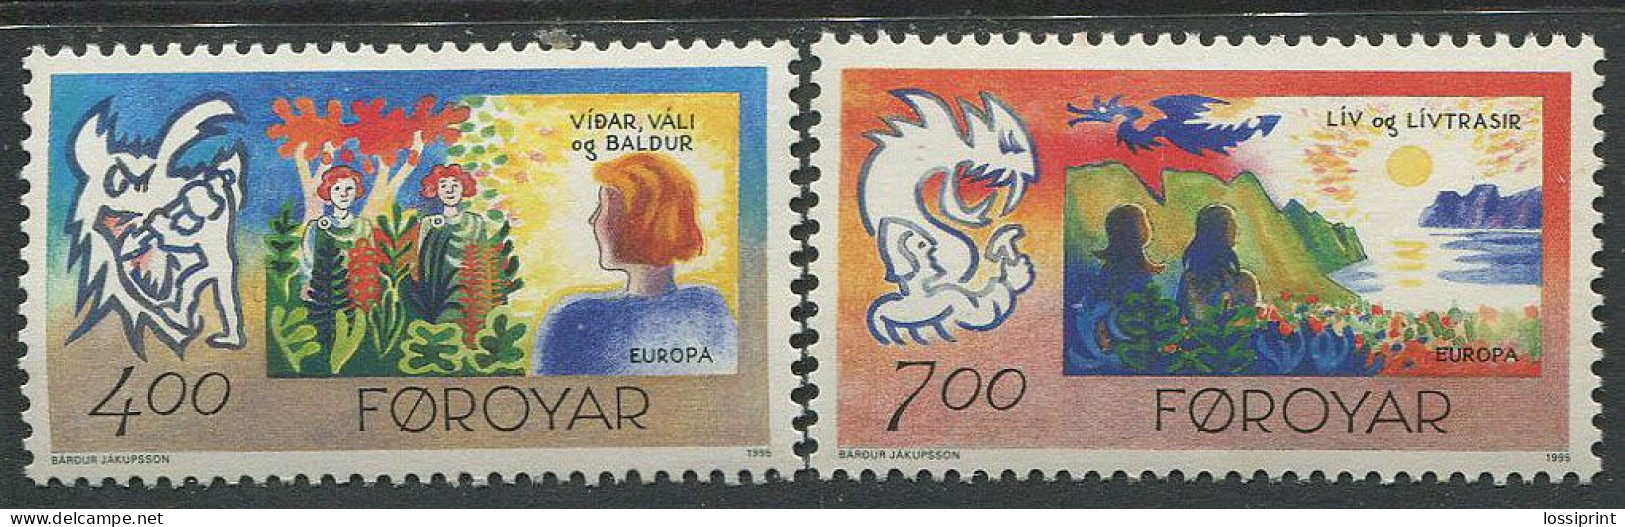 Foroyar:Faroe Islands:Unused Stamps EUROPA Cept, 1995, MNH - 1995